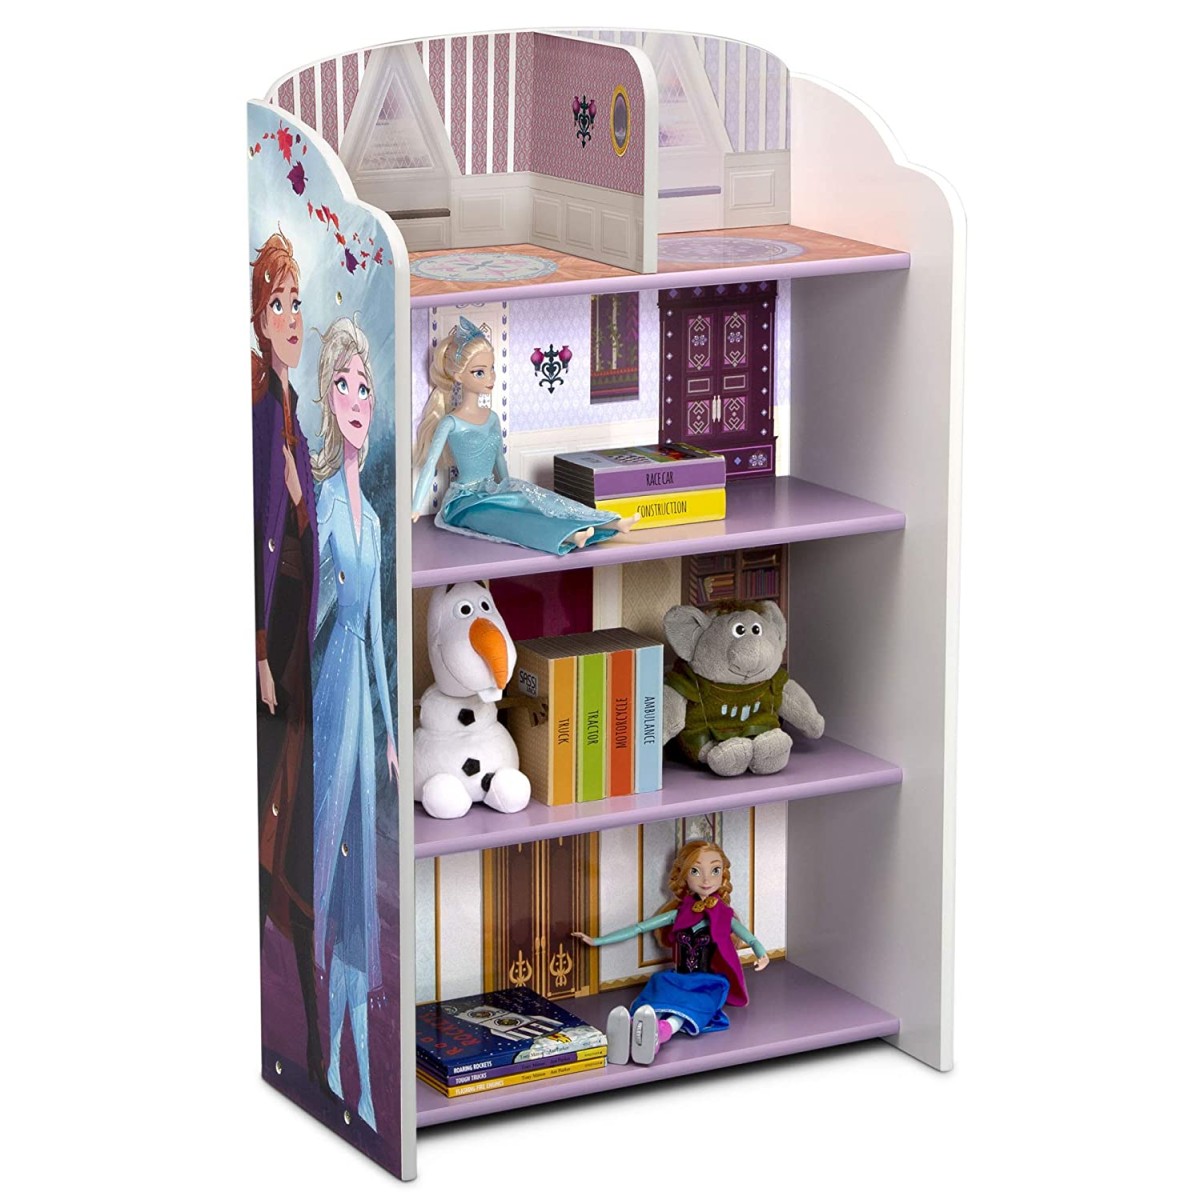 Alea's Deals 43% Off Delta Children Wooden Playhouse 4-Shelf Bookcase for Kids Frozen II! Was $54.99!  